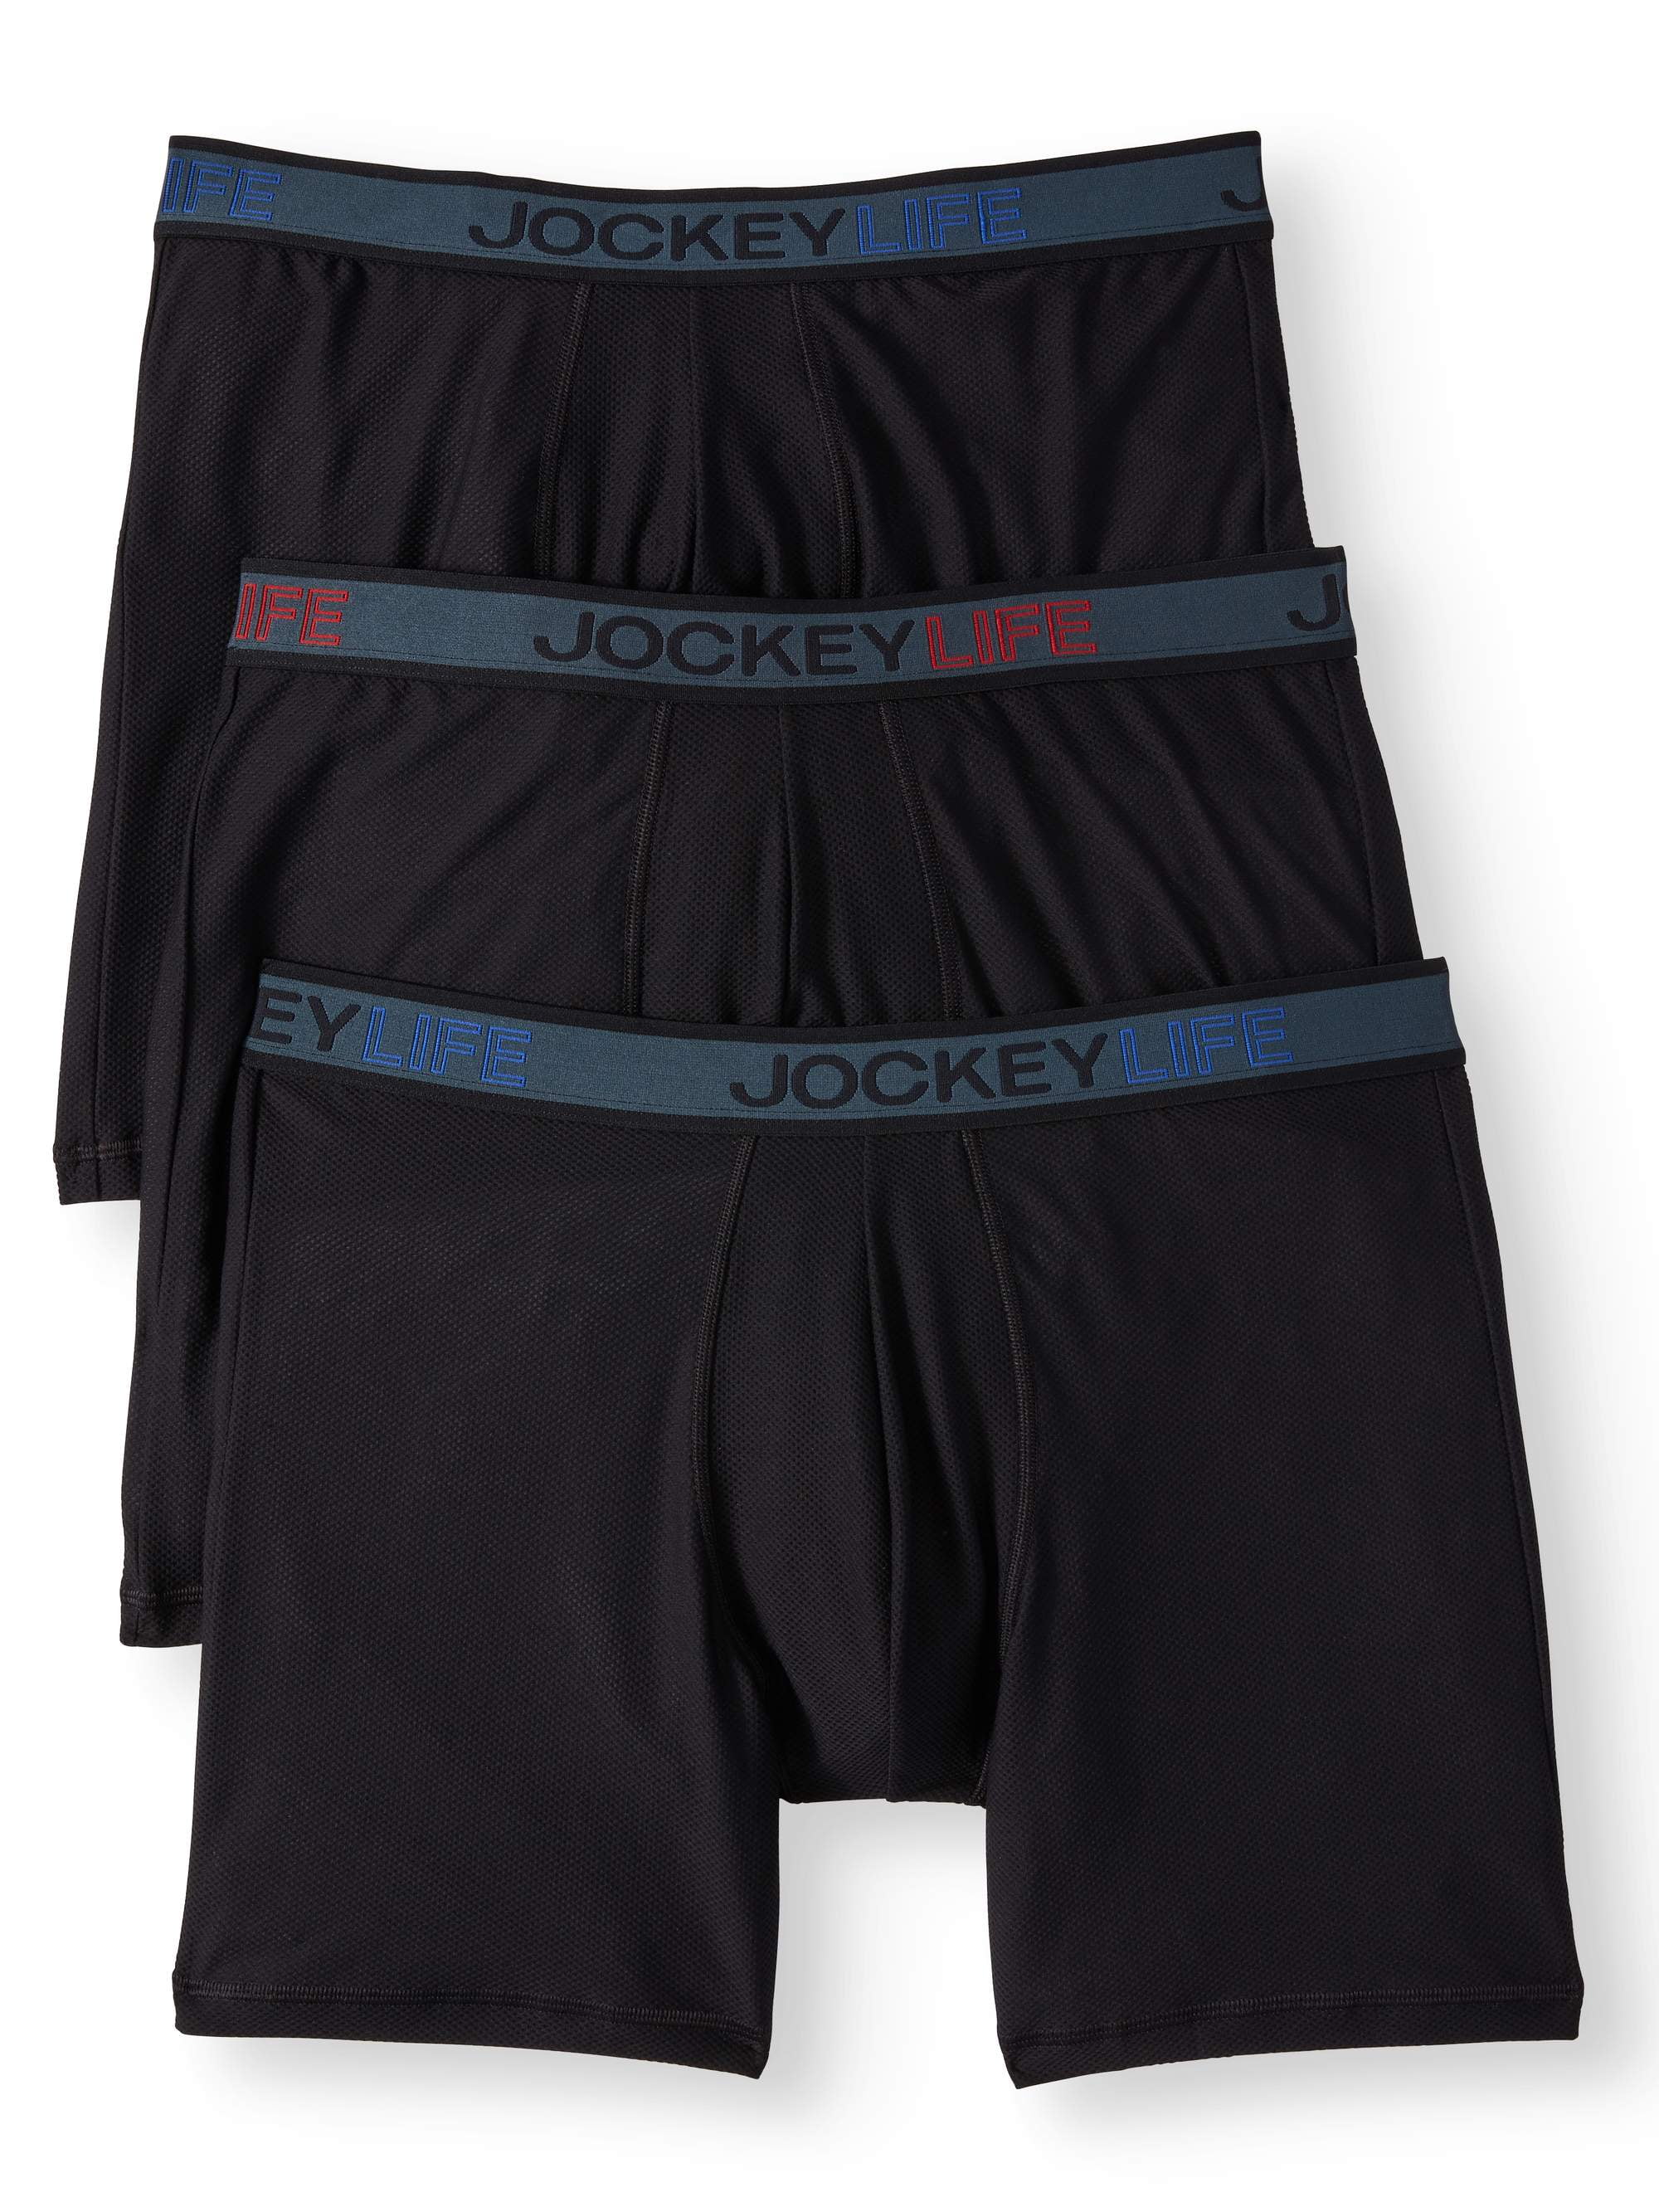 Jockey Ultimate Breathe Briefs 4 Pk., Underwear, Clothing & Accessories